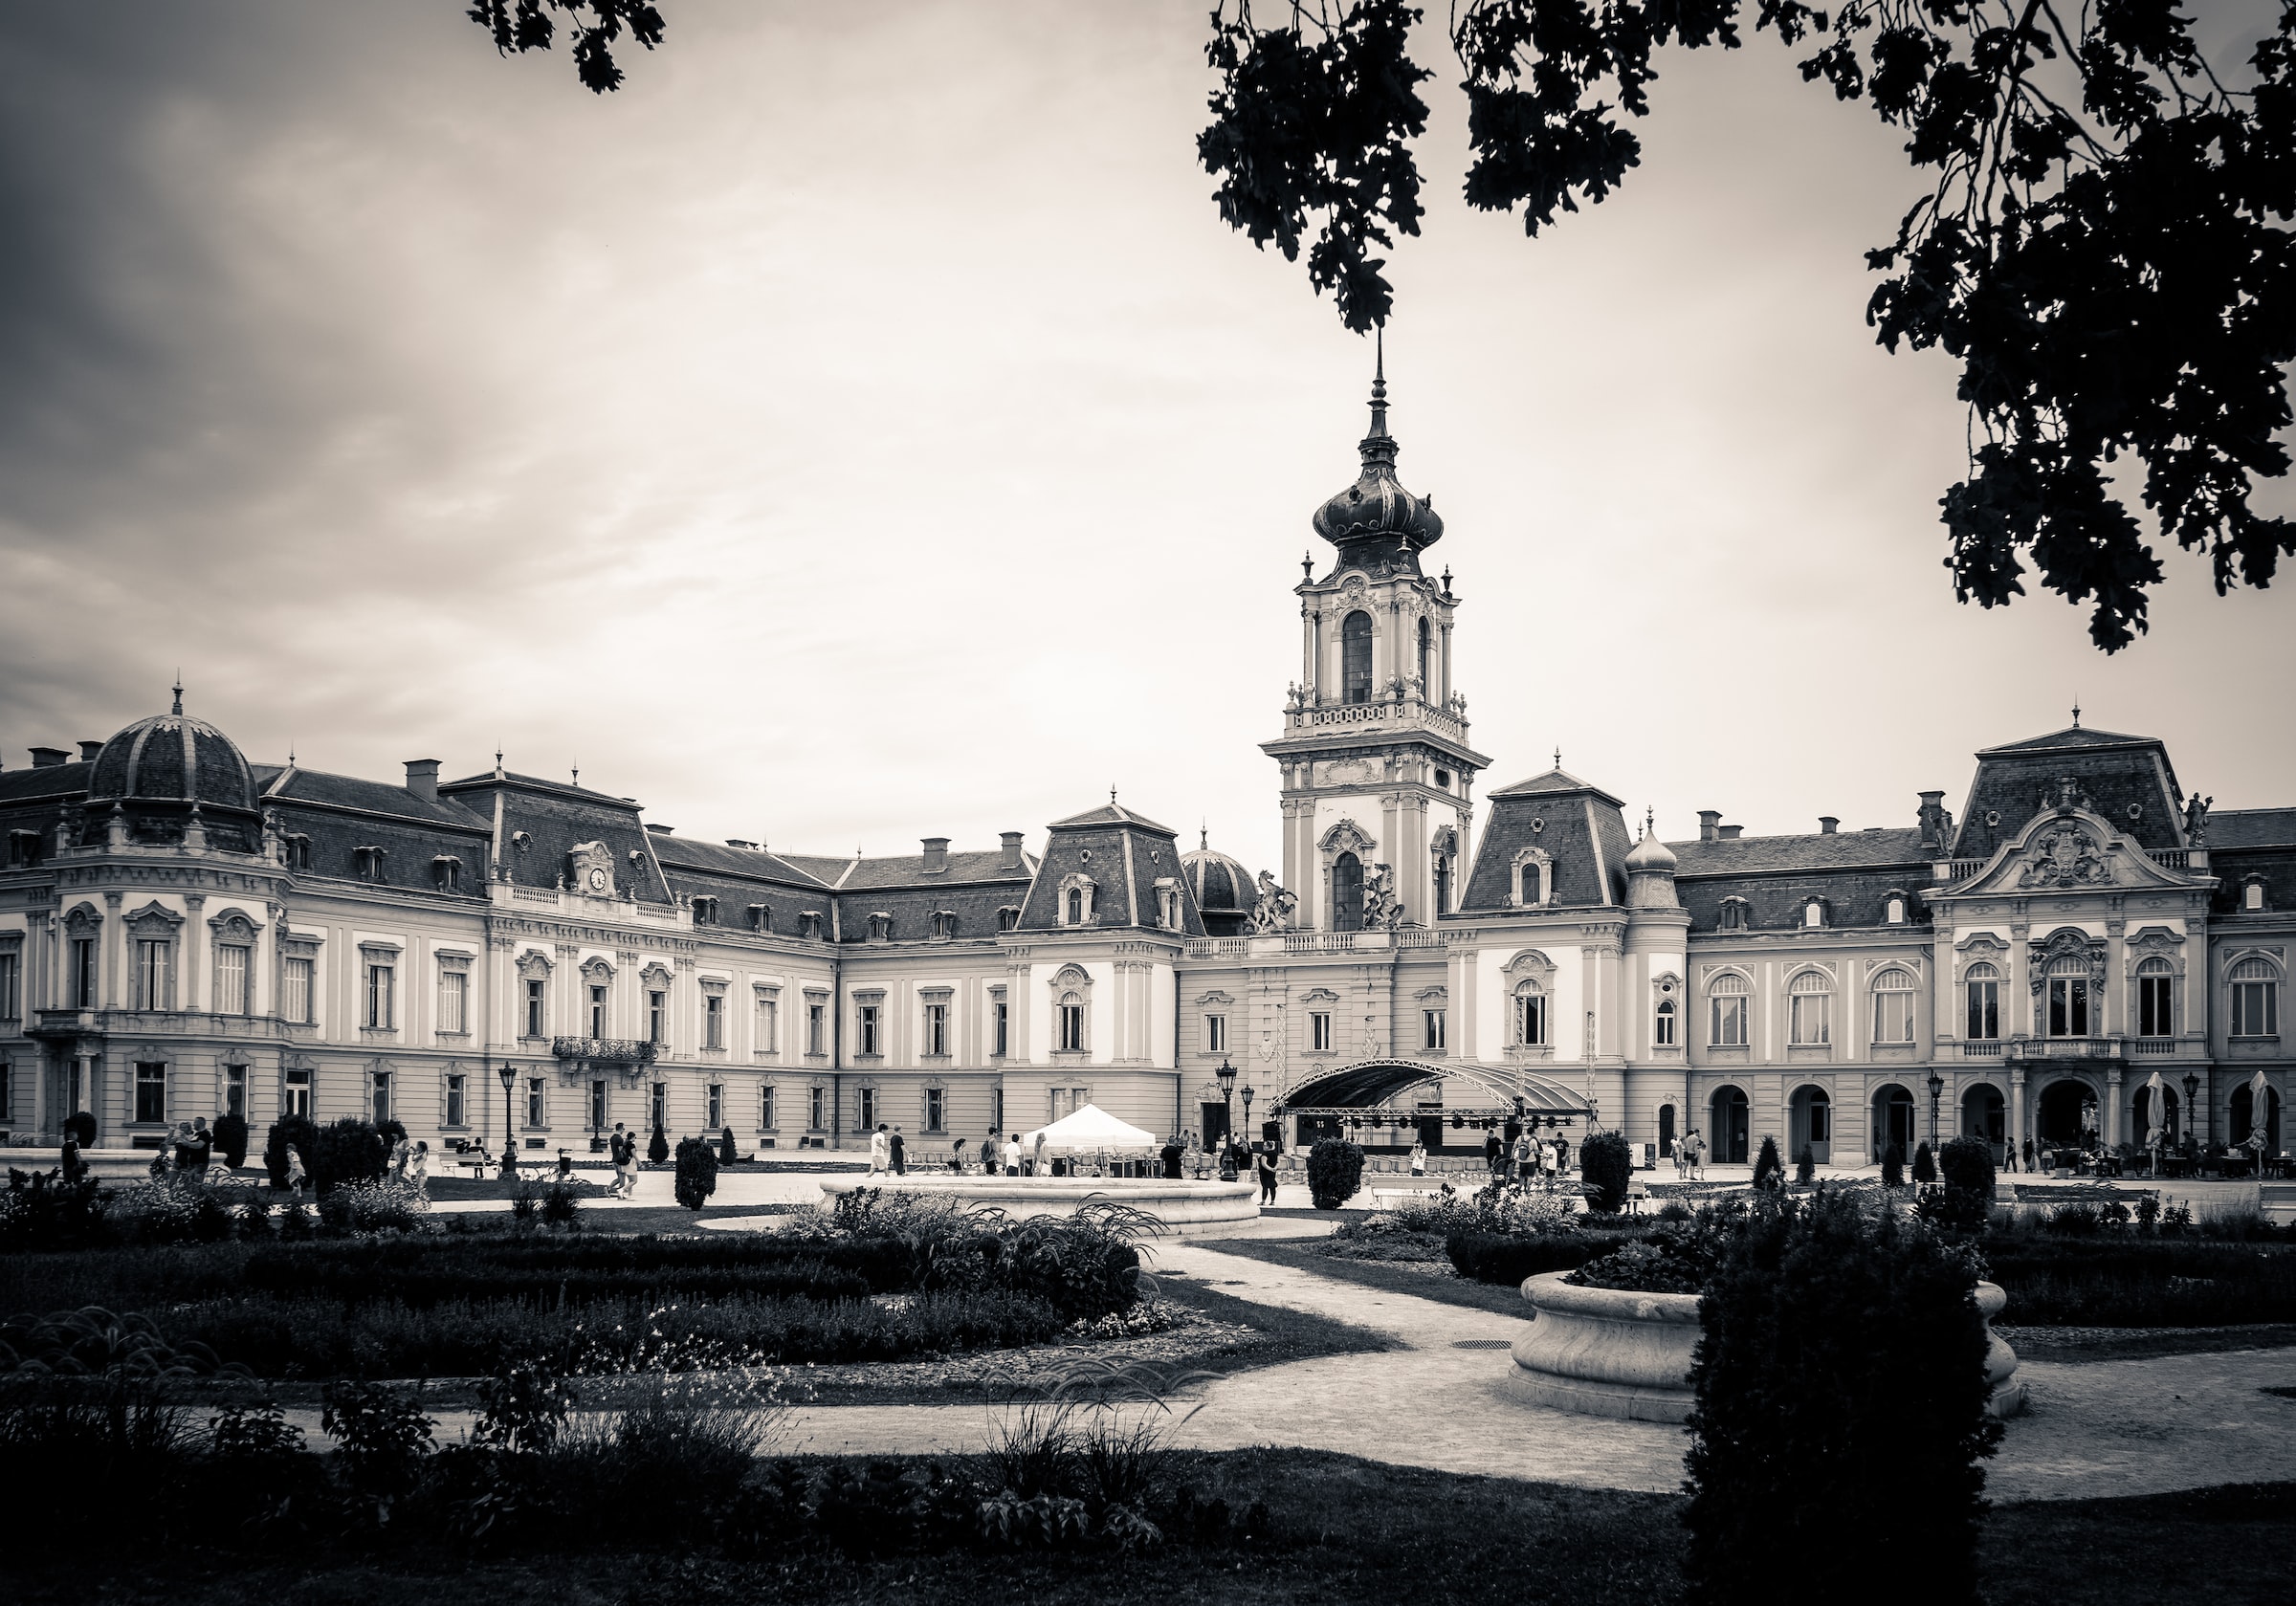 Festetics Palace in Zala, Hungary